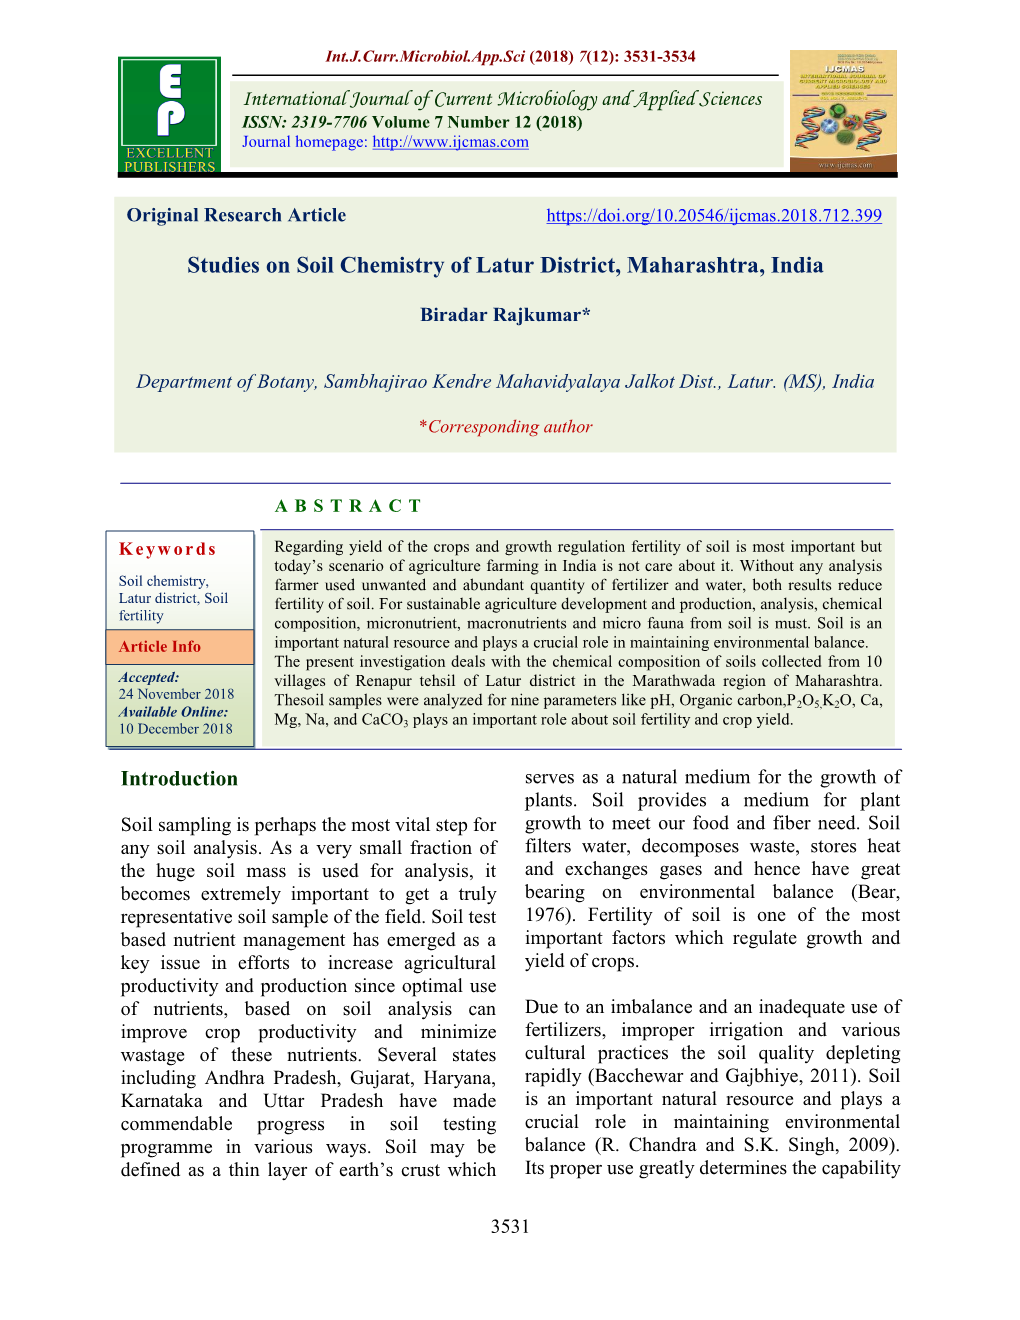 Studies on Soil Chemistry of Latur District, Maharashtra, India